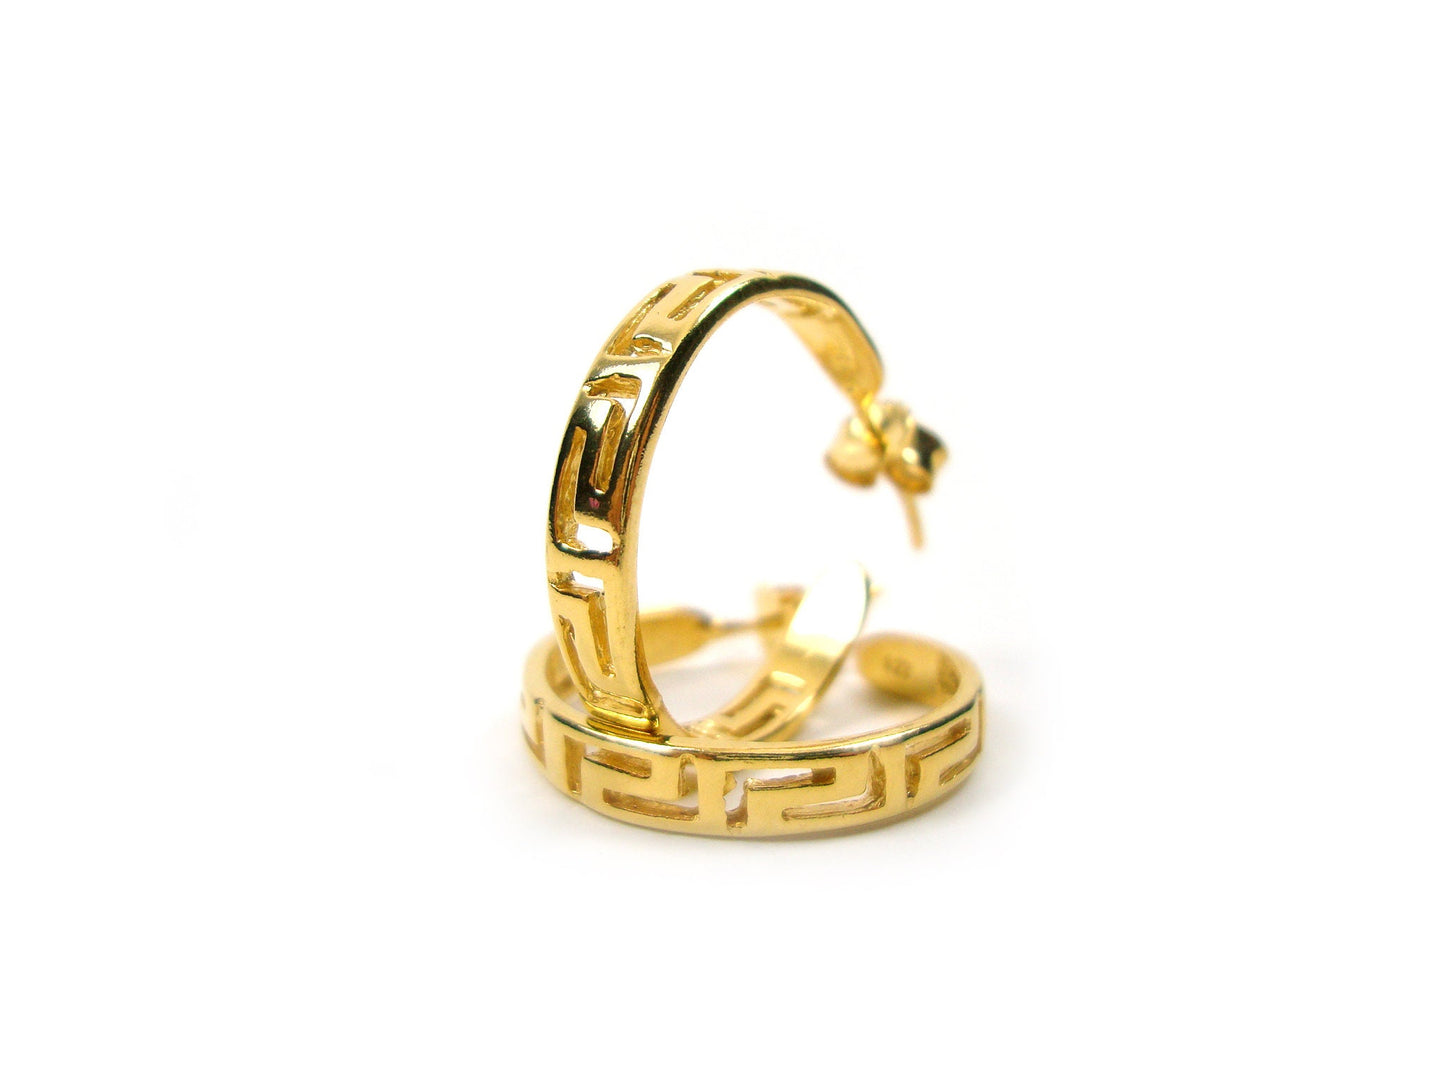 Griechische Ohrringe aus Sterlingsilber 925, griechische Ewigkeitsschlüssel, vergoldete Creolen, 21 mm, griechische Ohrringe, Boucles d'oreilles grecques